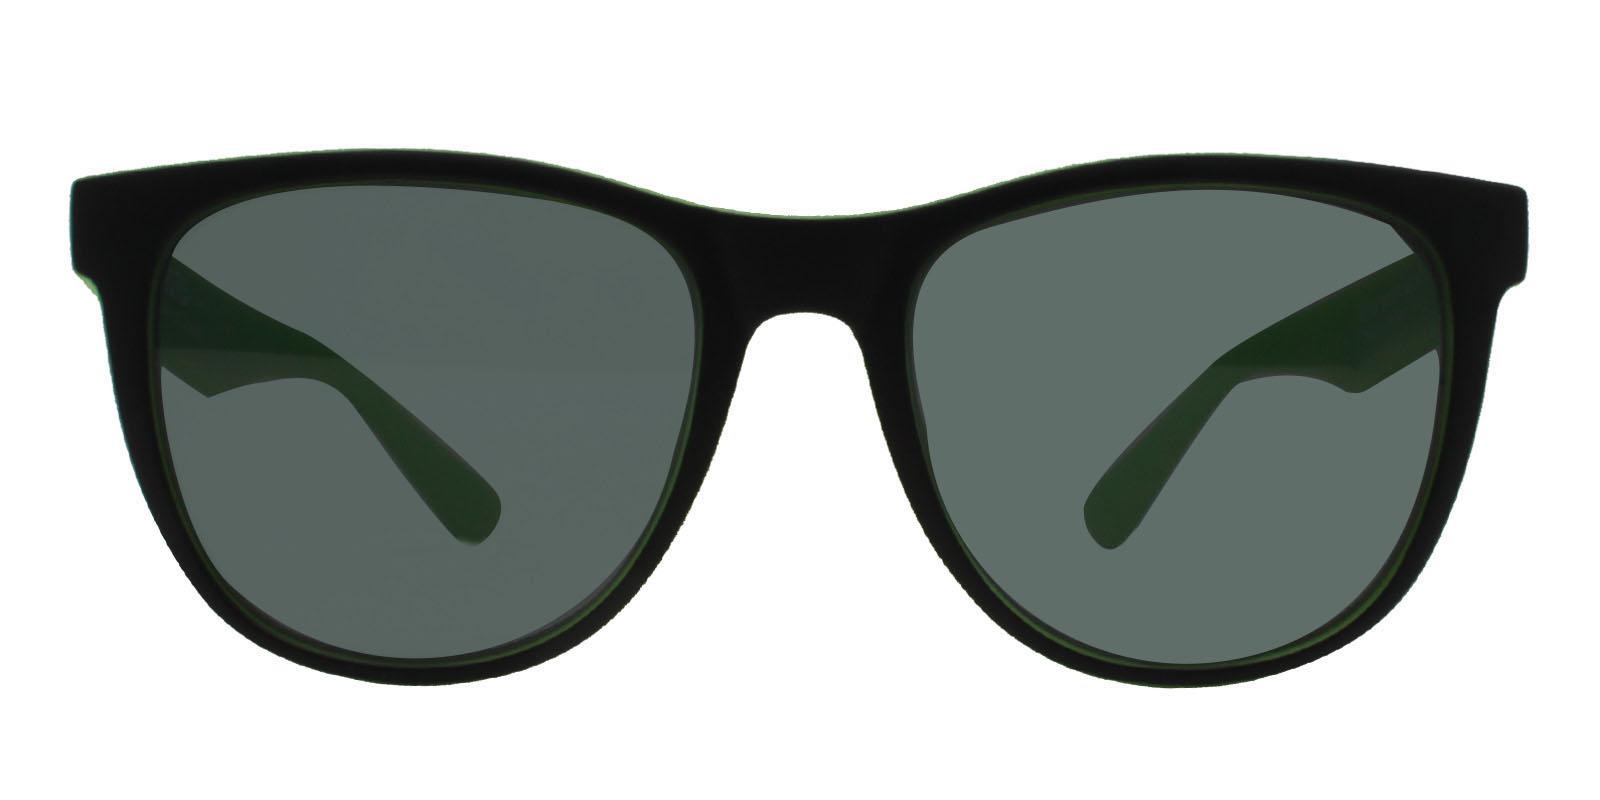 Hallstead Green TR Sunglasses , UniversalBridgeFit Frames from ABBE Glasses